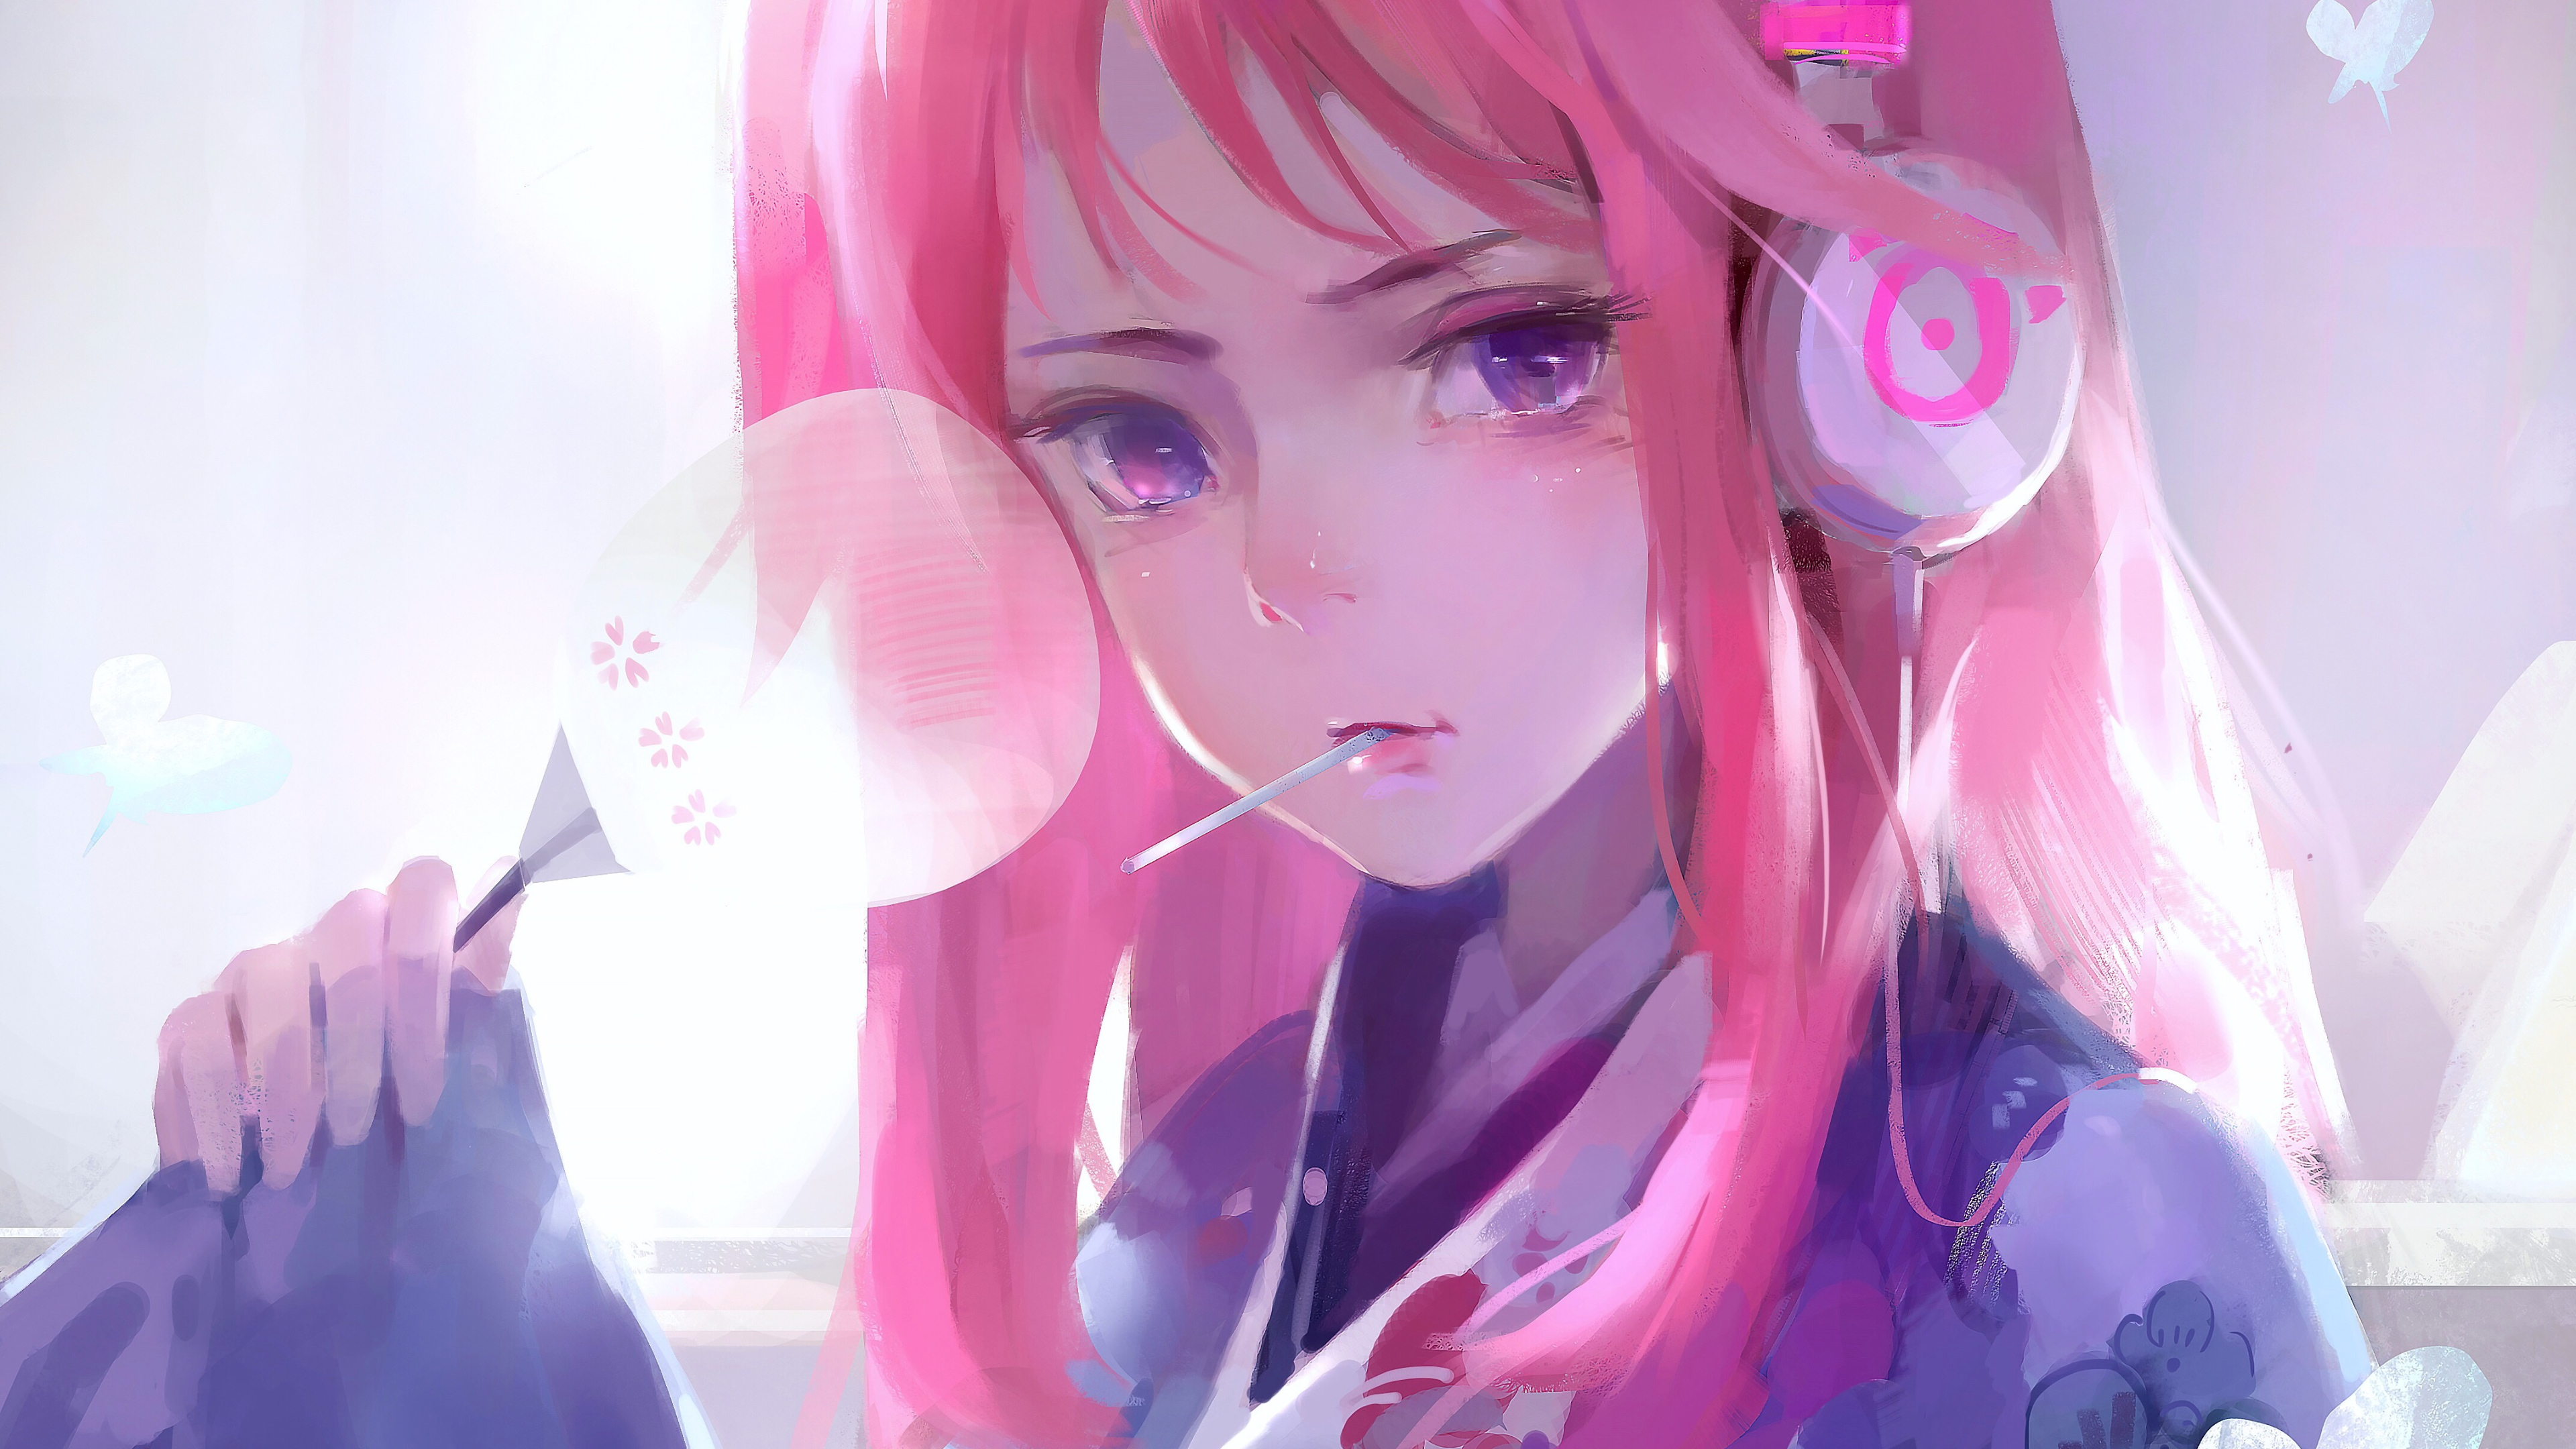 Cute Anime Girl Pink Art 4k, HD Anime, 4k Wallpapers, Images ...